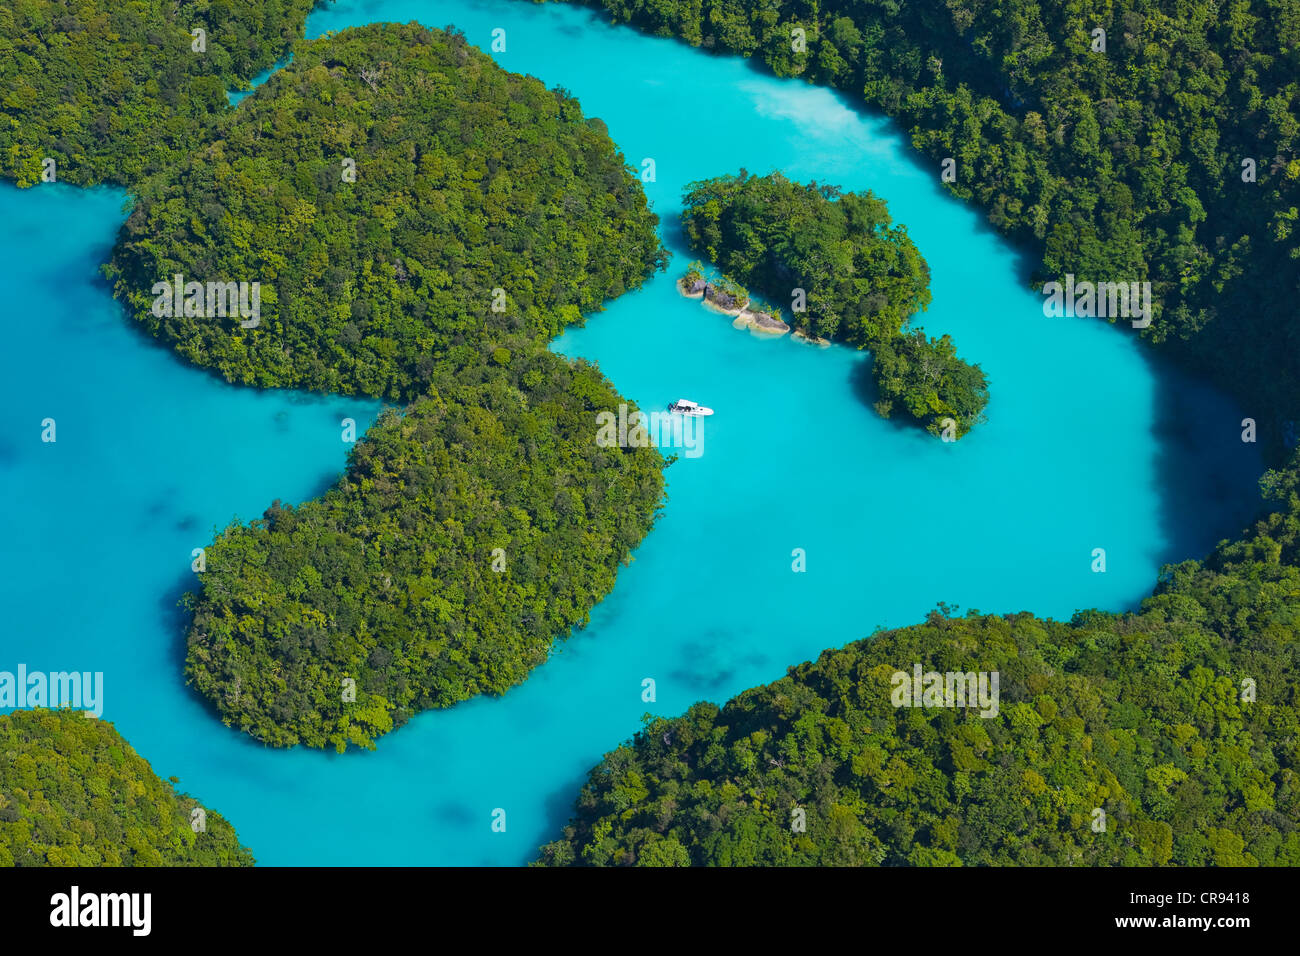 Rock Island, Palau Stockfoto